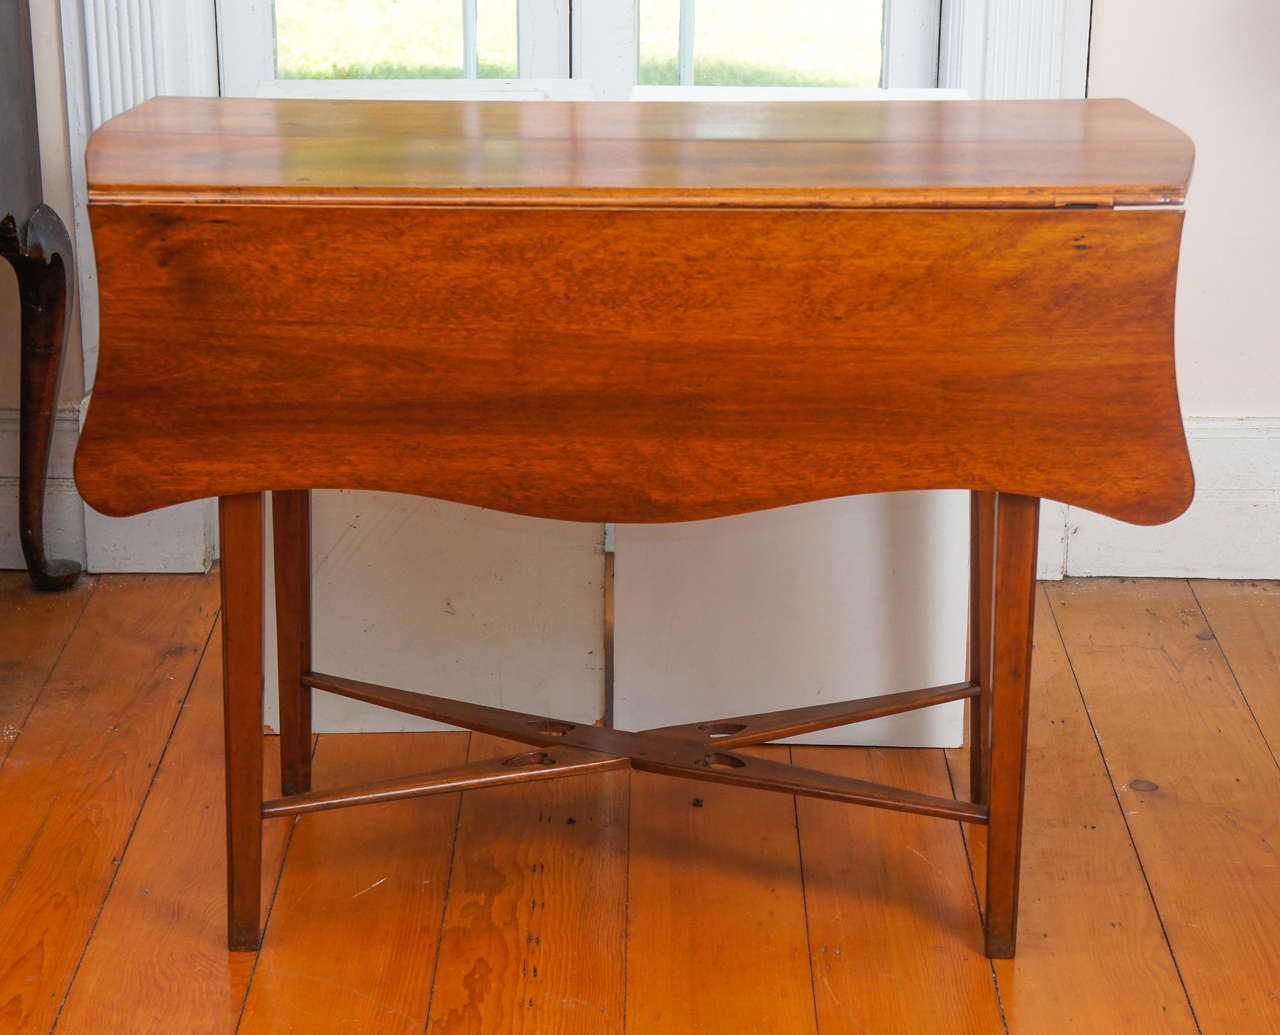 19th century American mahogany gateleg table.
Open, table measures: 36